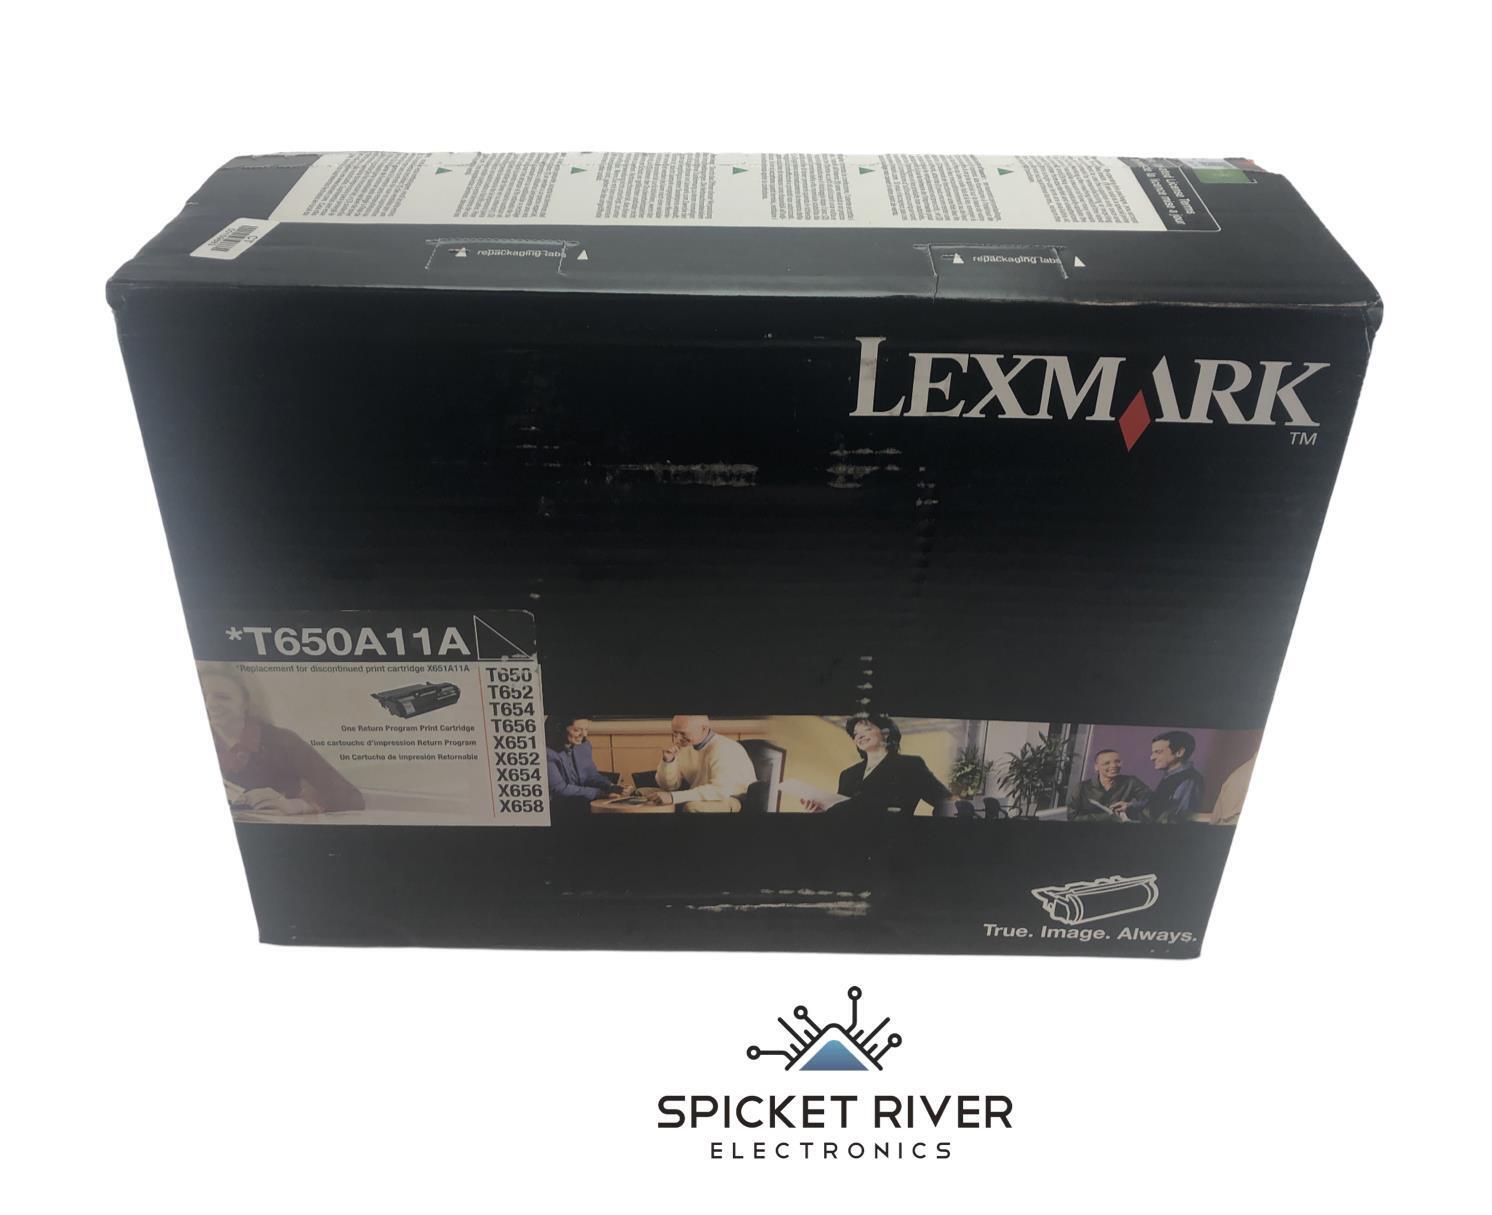 NEW - Genuine - Lexmark T650A11A Printer Toner Cartridge - Black